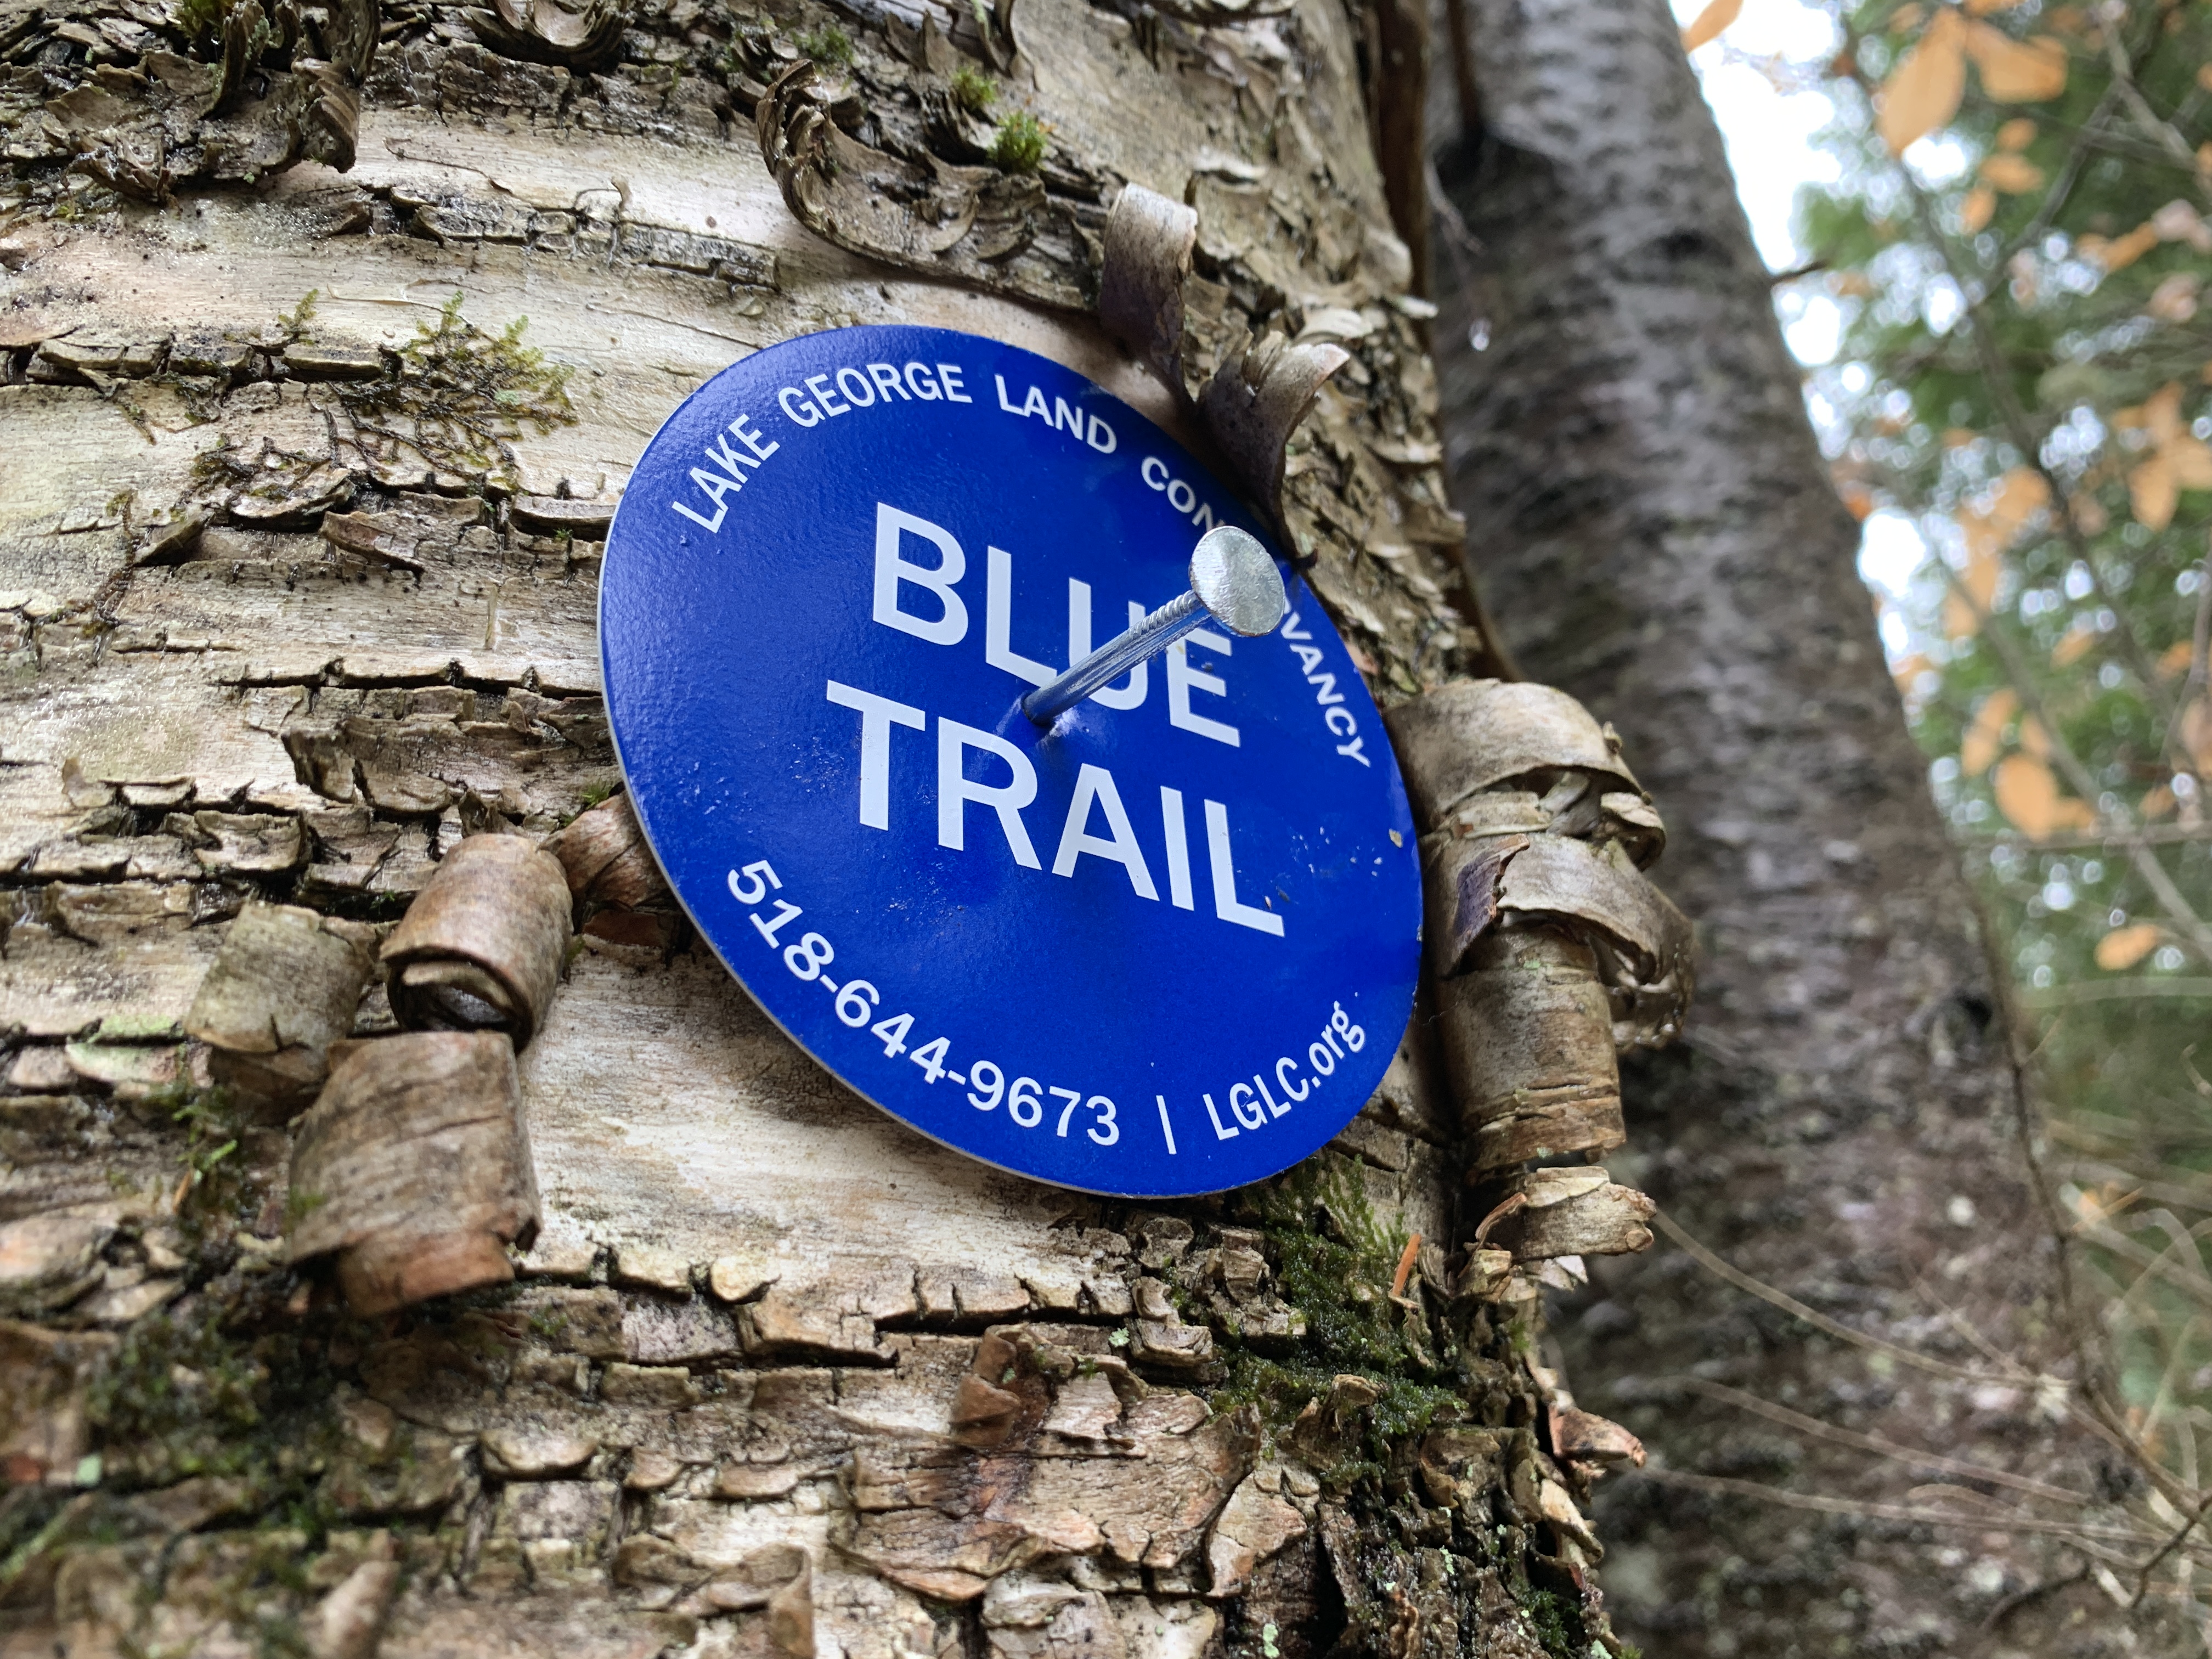 Blue trail marker on a birch tree; marker says "Blue Trail"